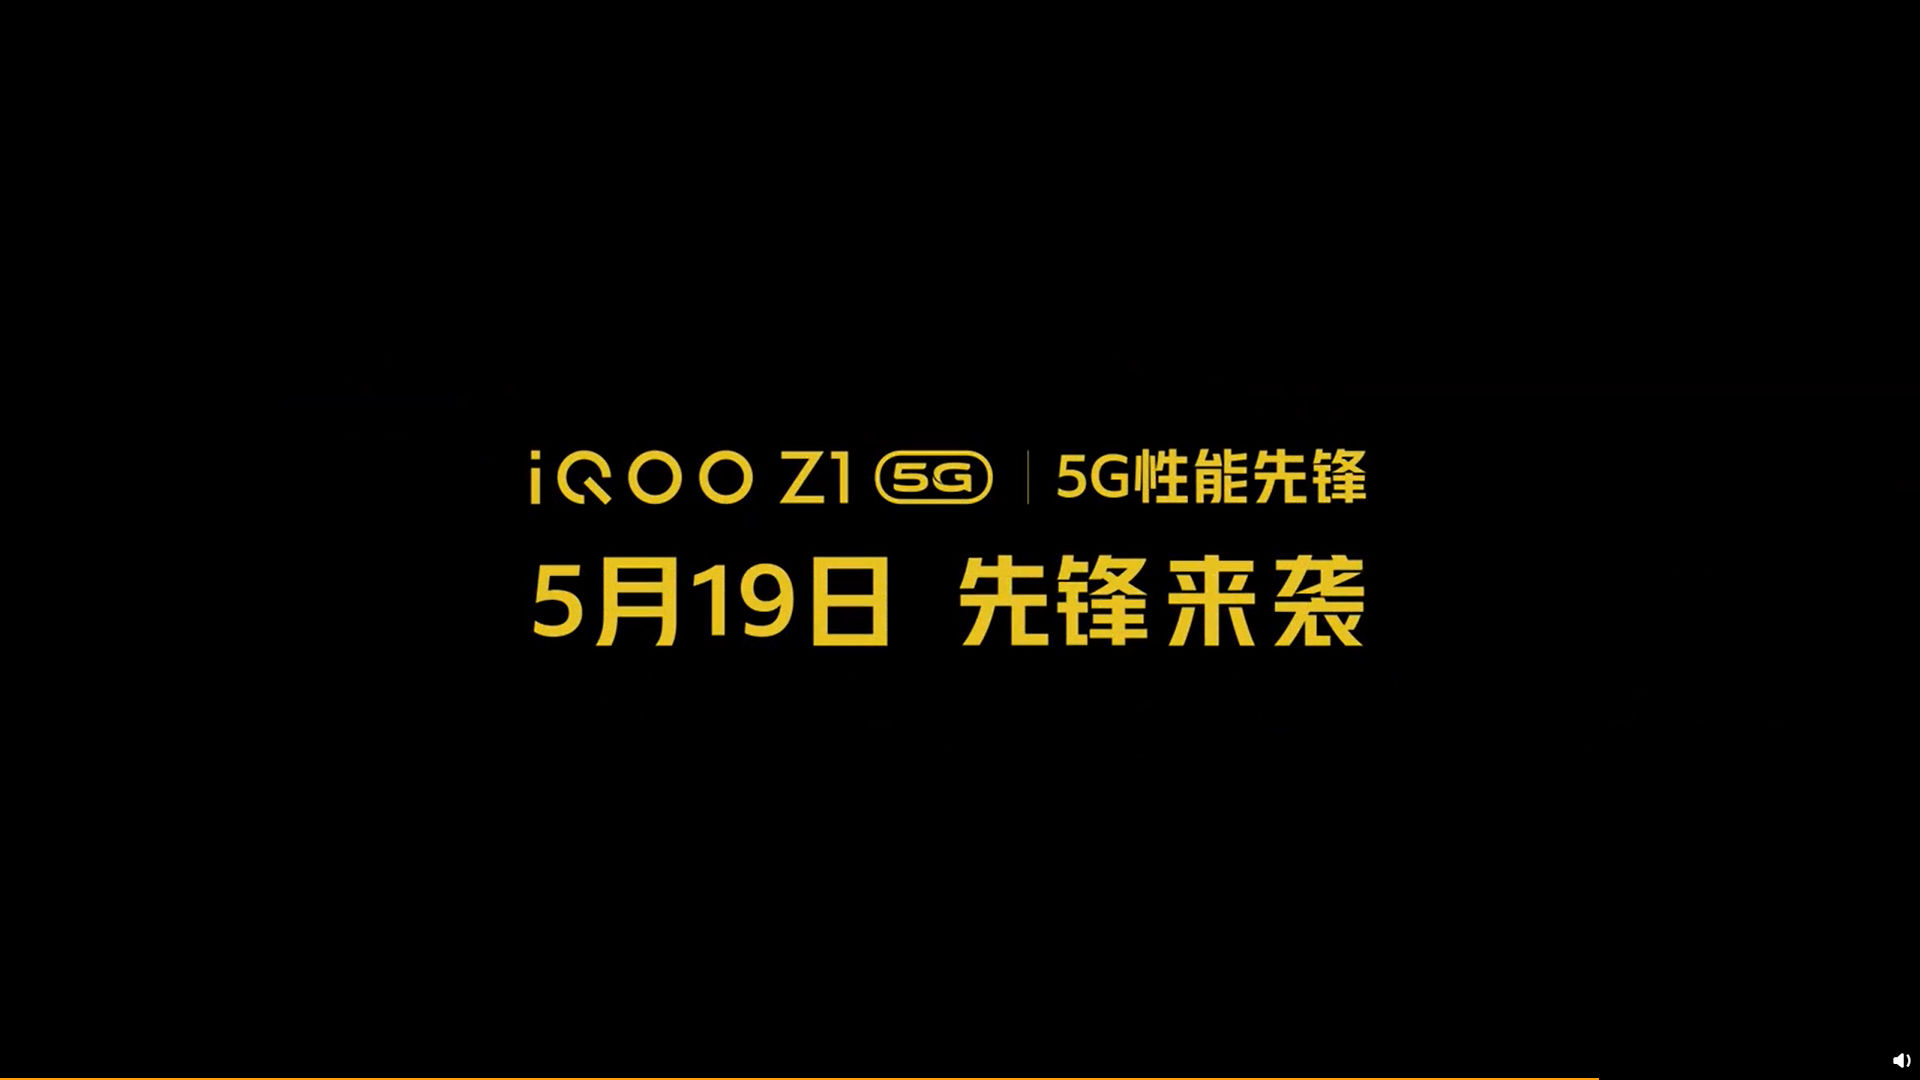 iQOO Z1 launch date announcement